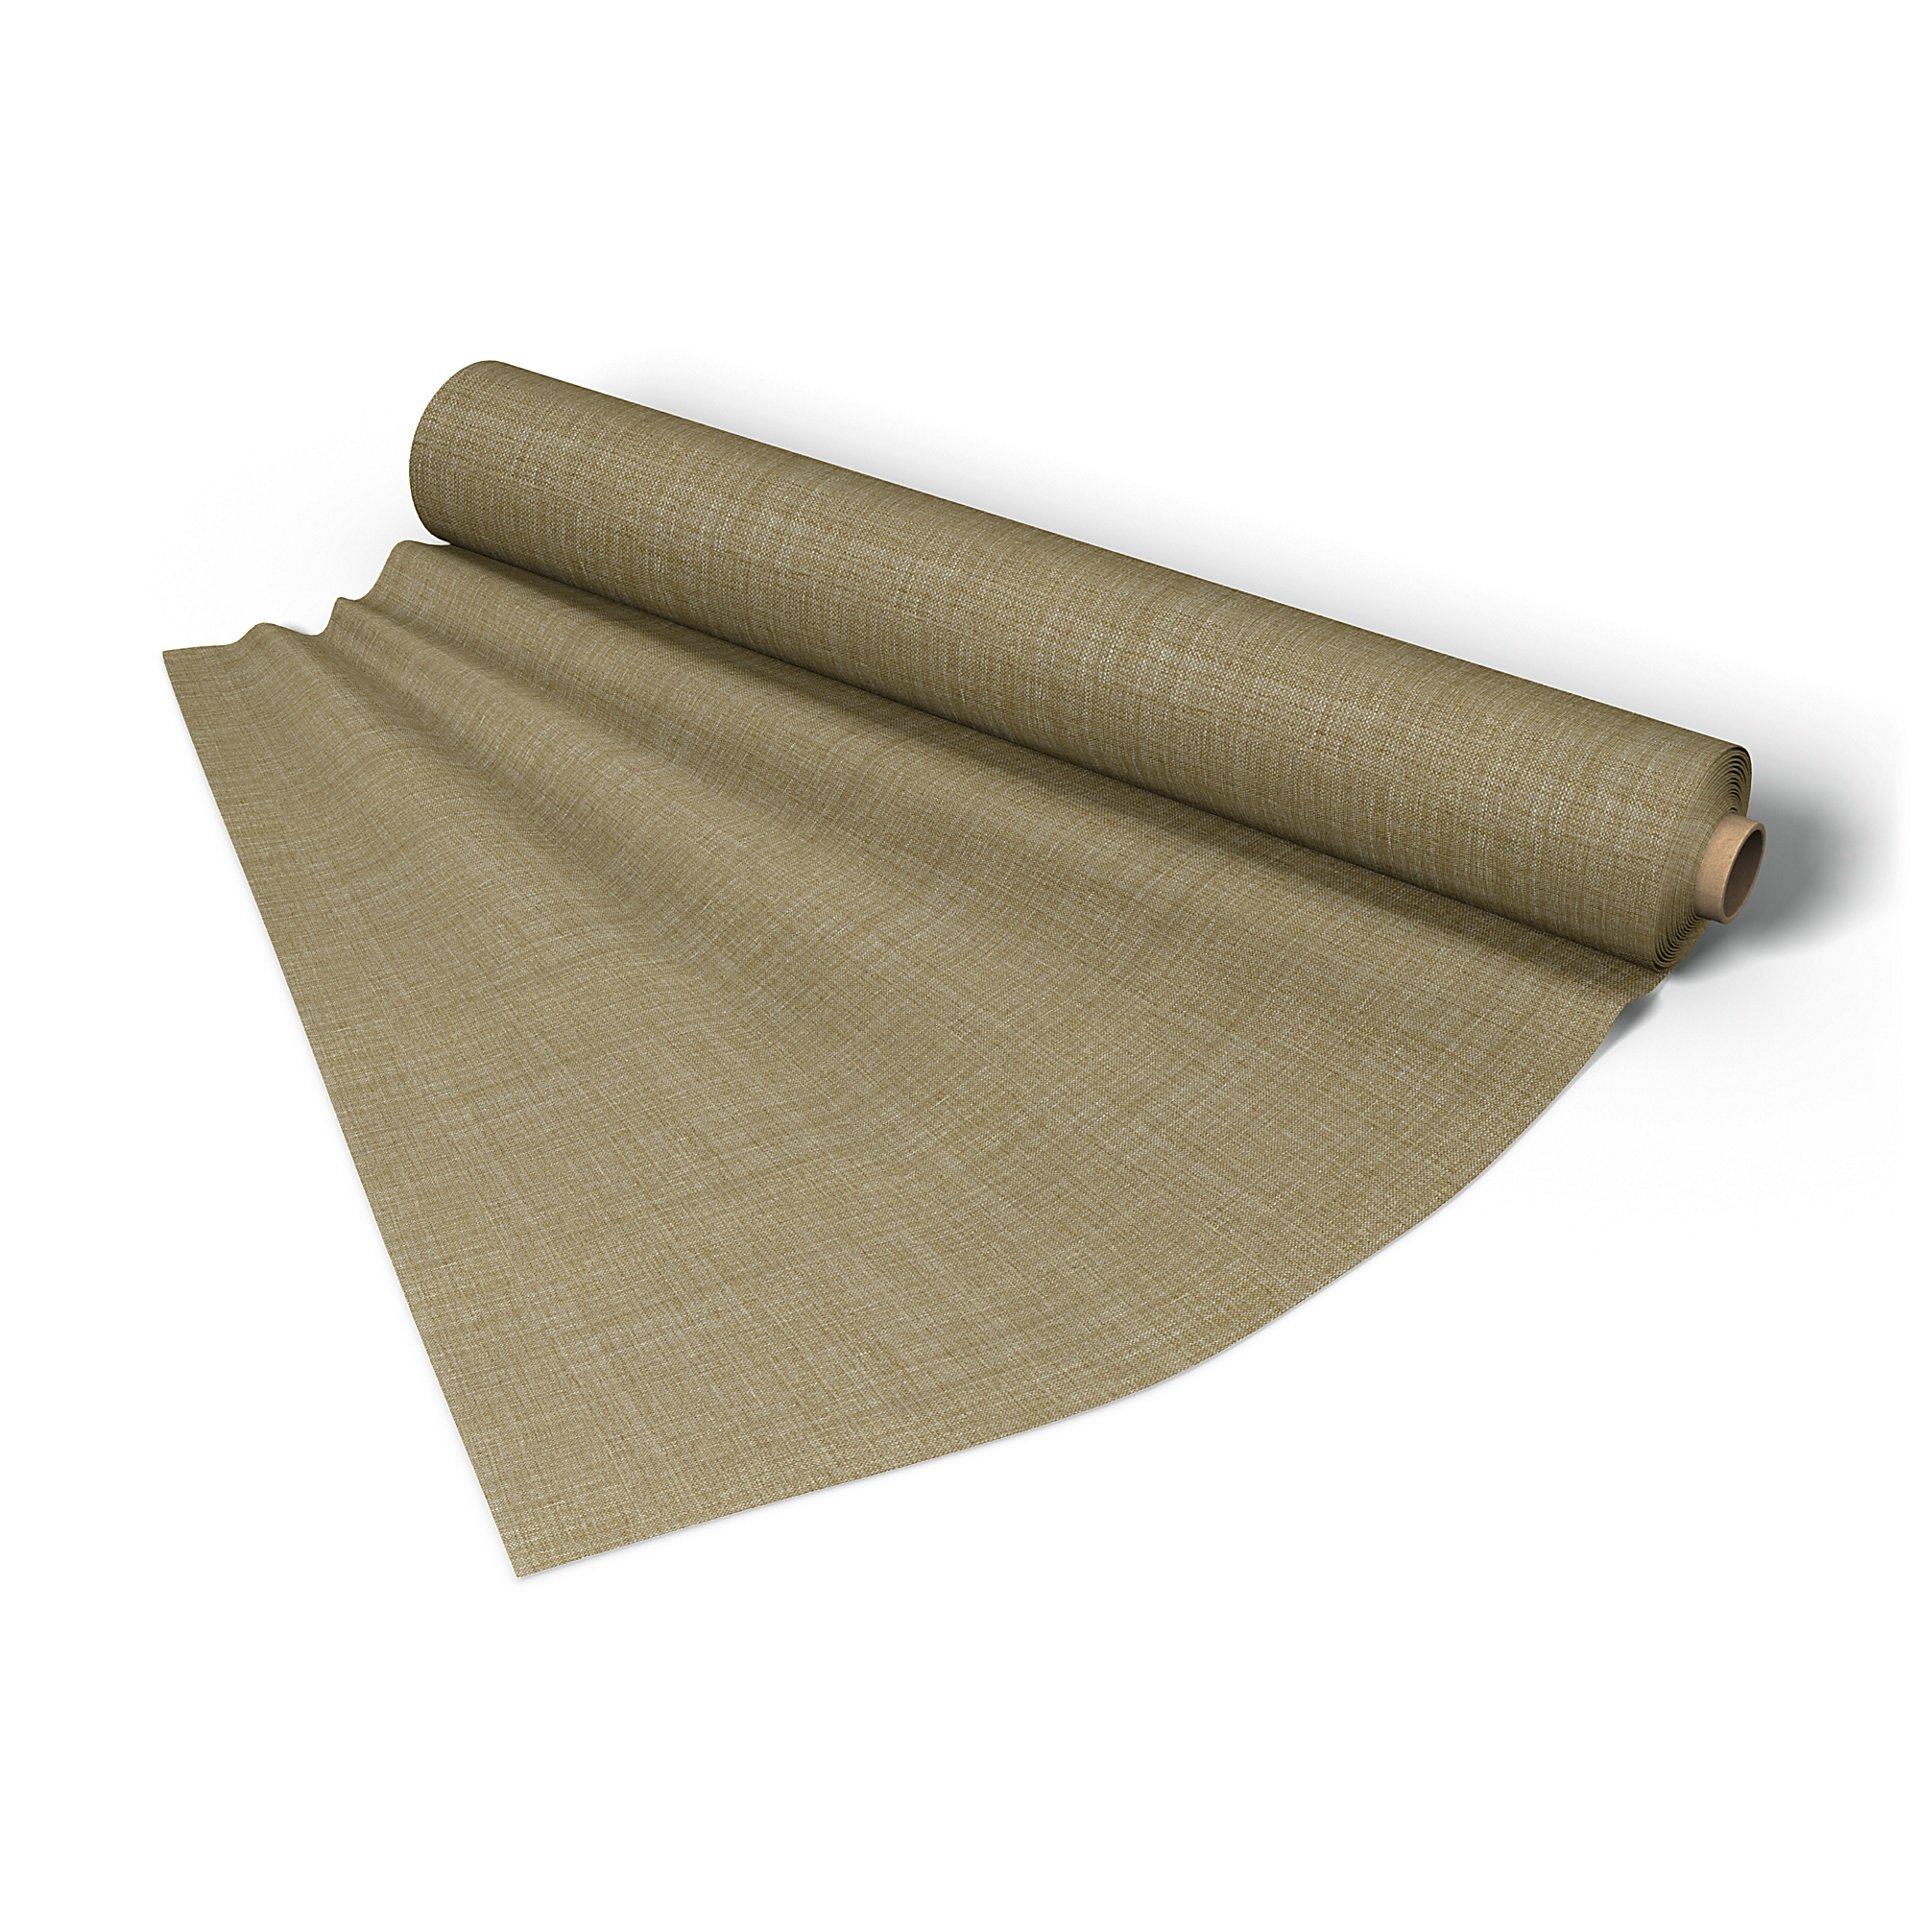 Fabric per metre, Dusty Yellow, Boucle & Texture - Bemz